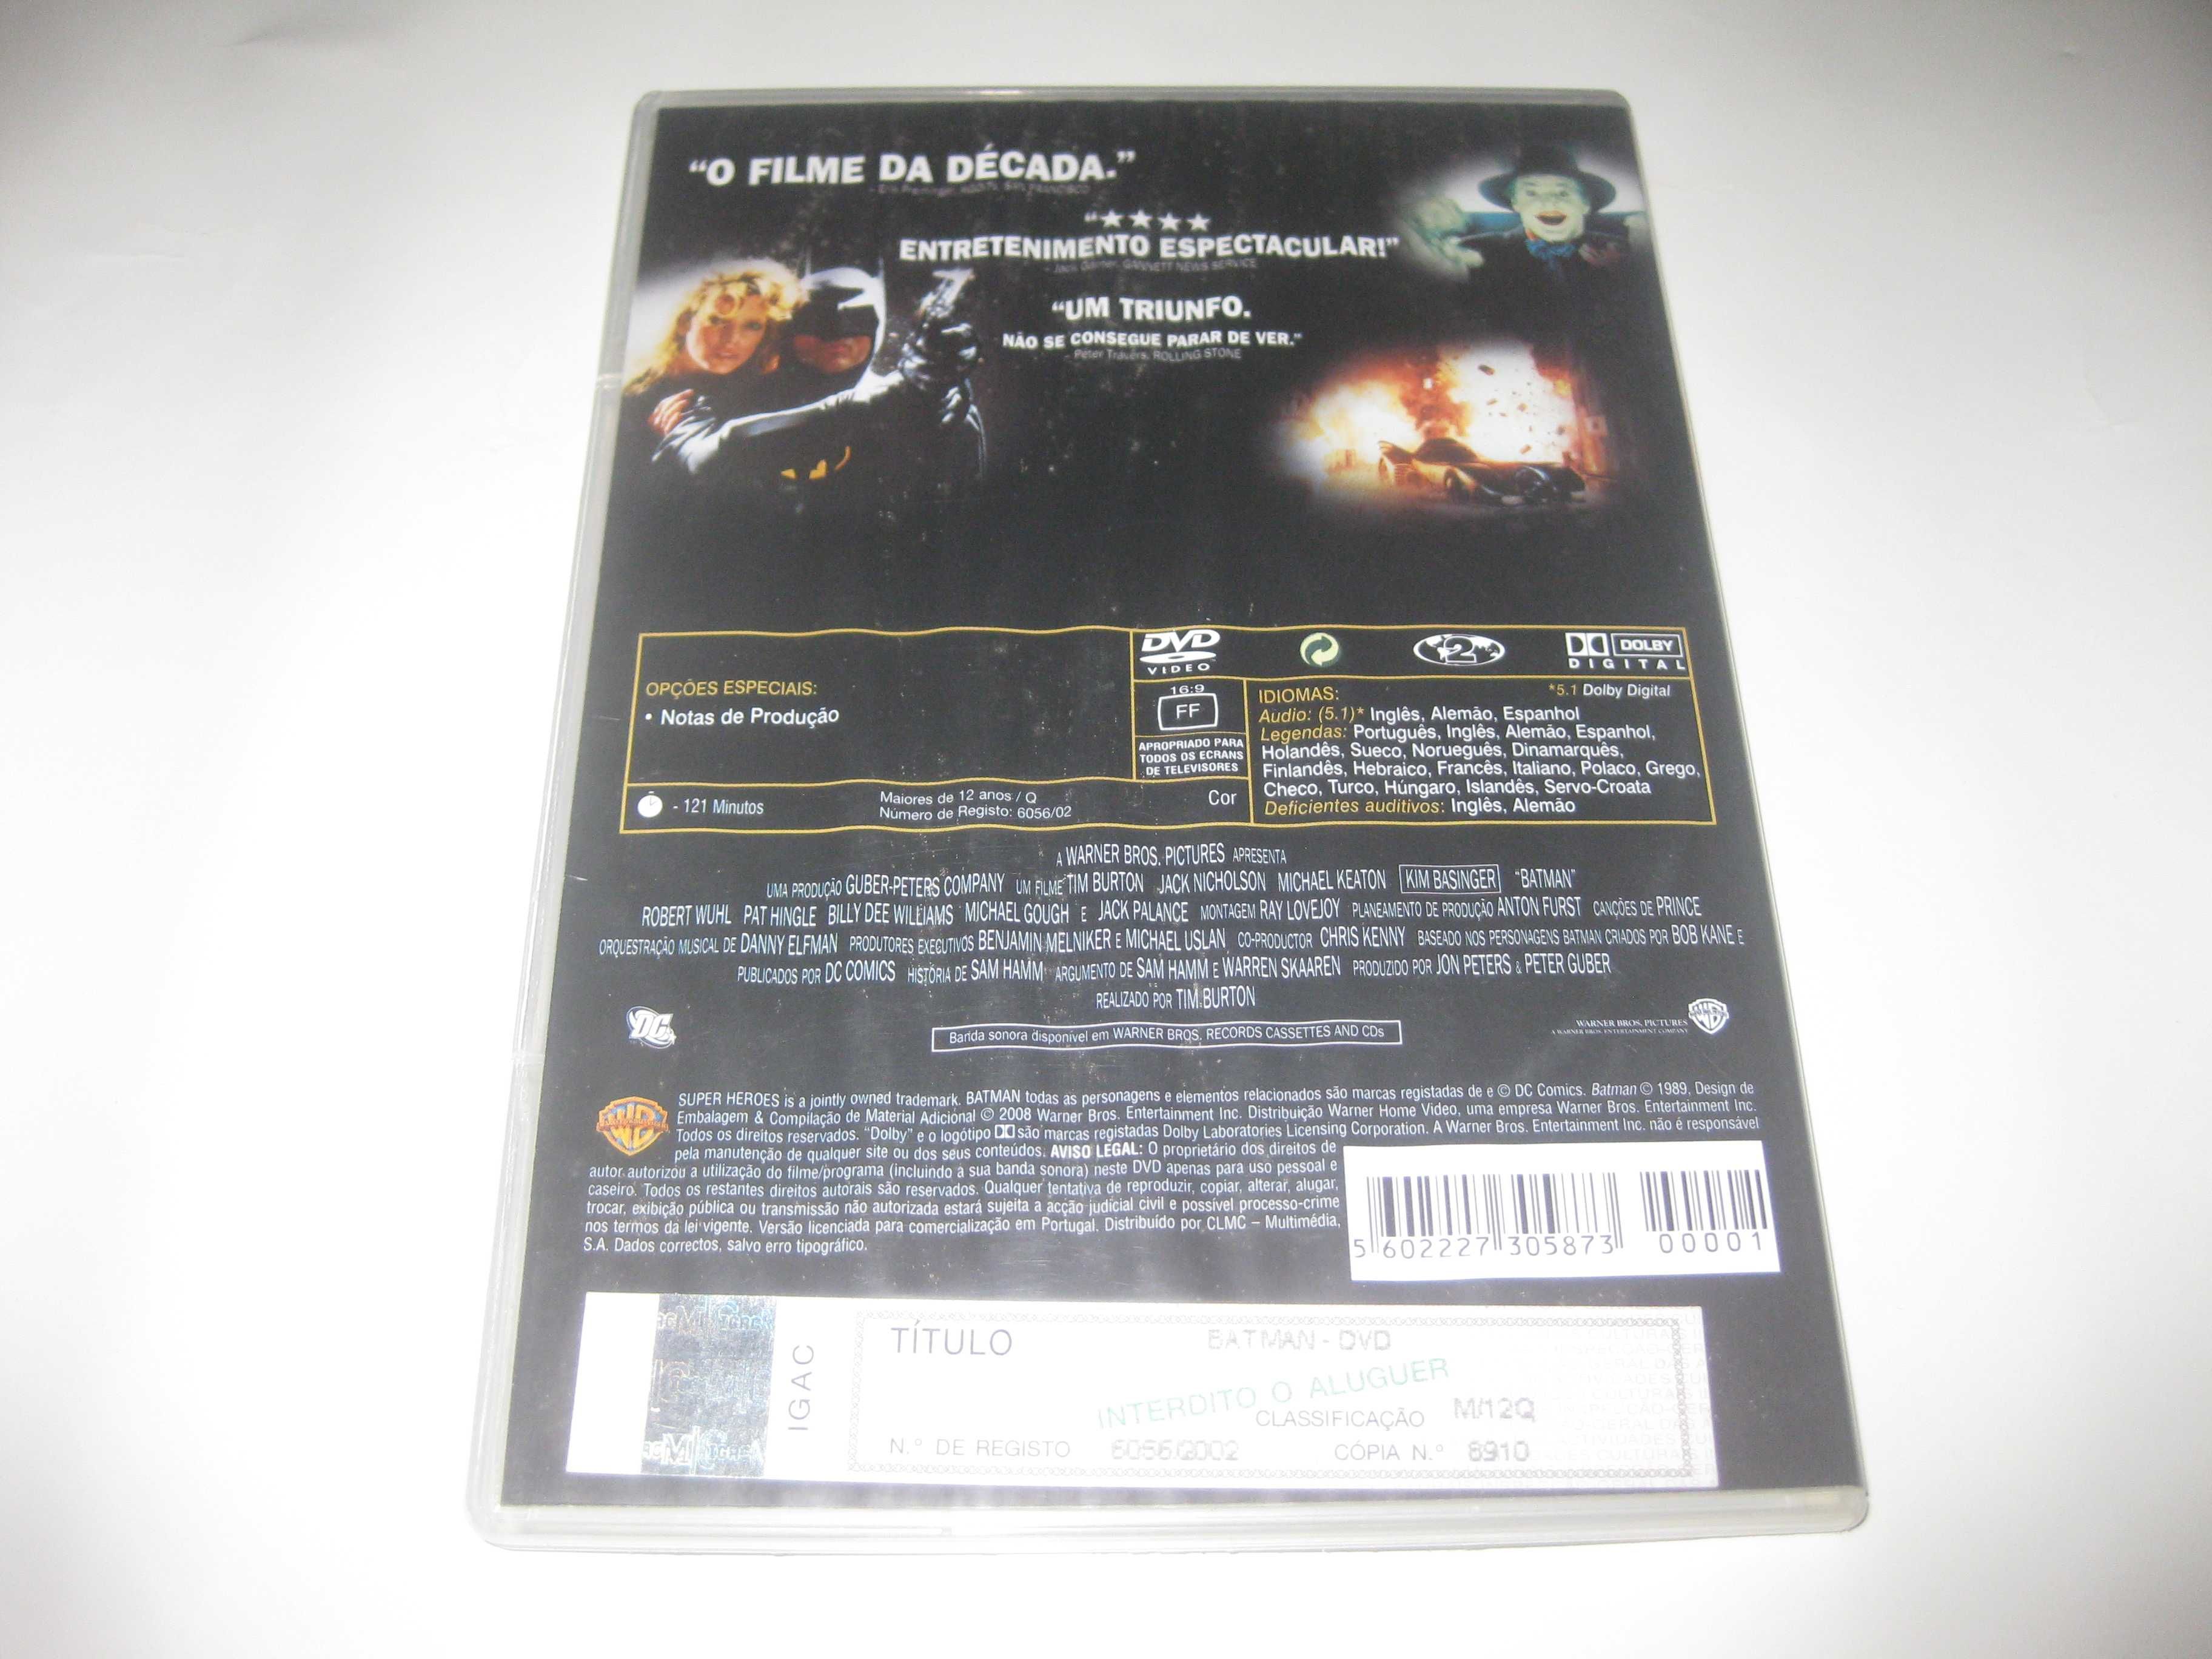 DVD "Batman" de Tim Burton